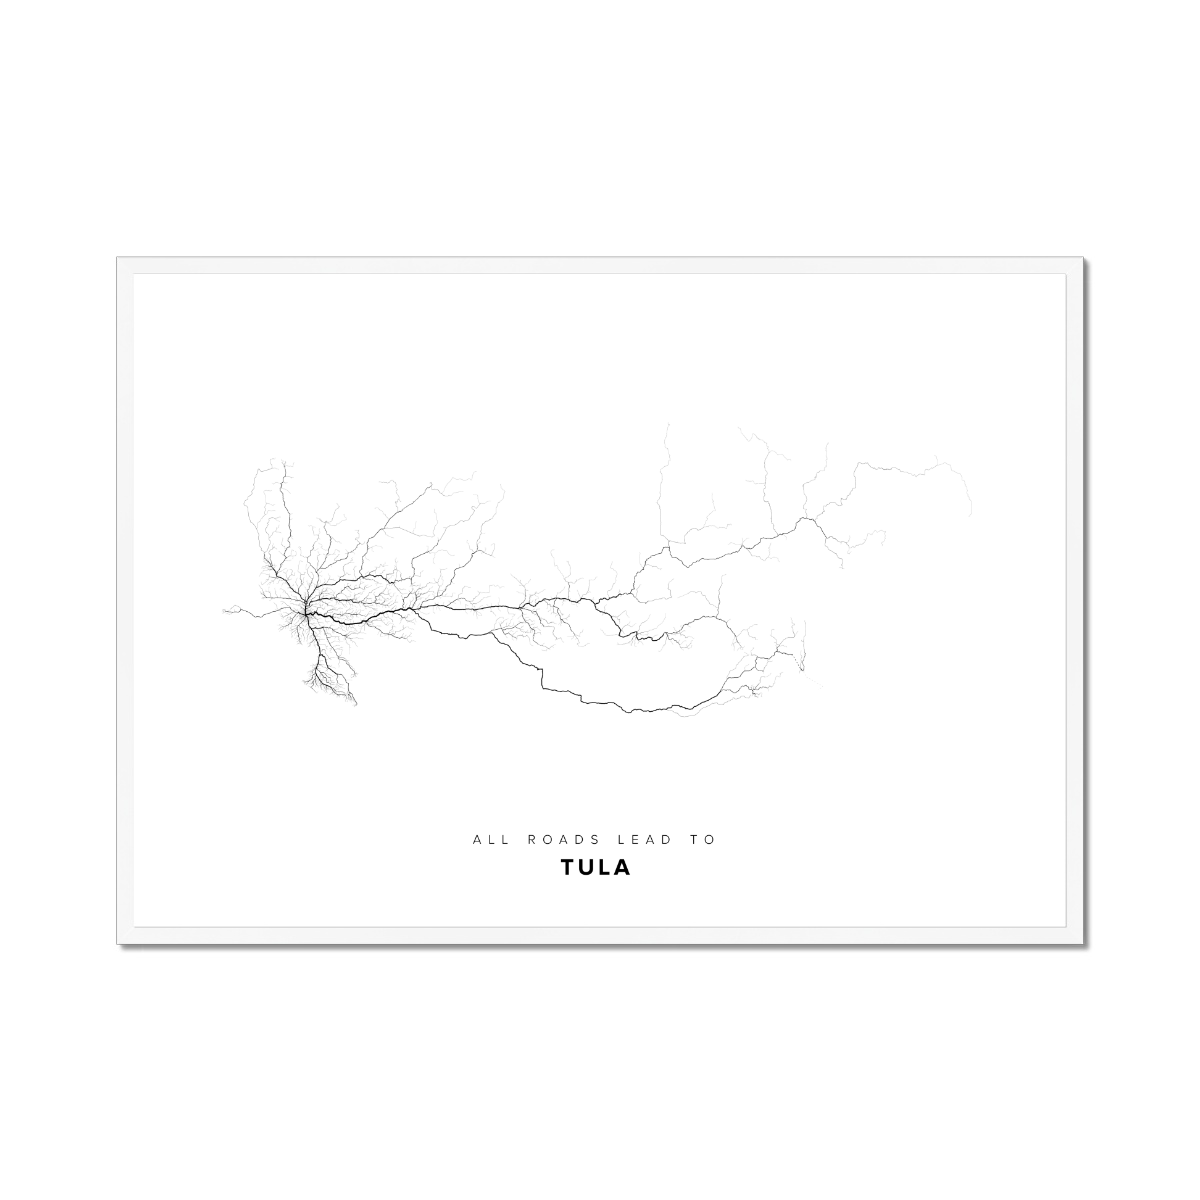 All roads lead to Tula (Russian Federation) Fine Art Map Print